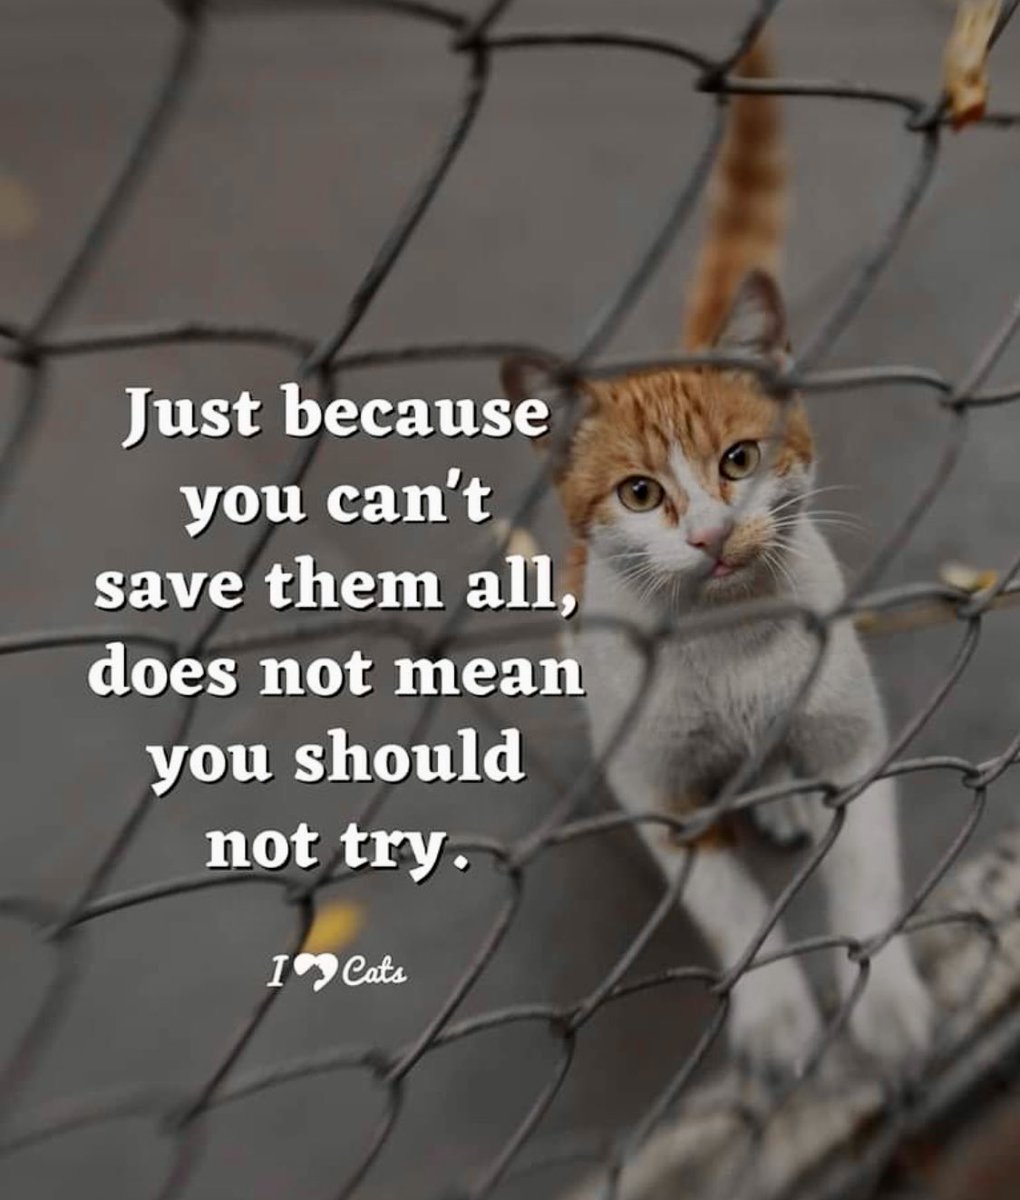 #CatsOfTwitter #Rescue #StrayCats #CommunityCats #FeralCats #SpayAndNeuter #TNR Trap Neuter Return